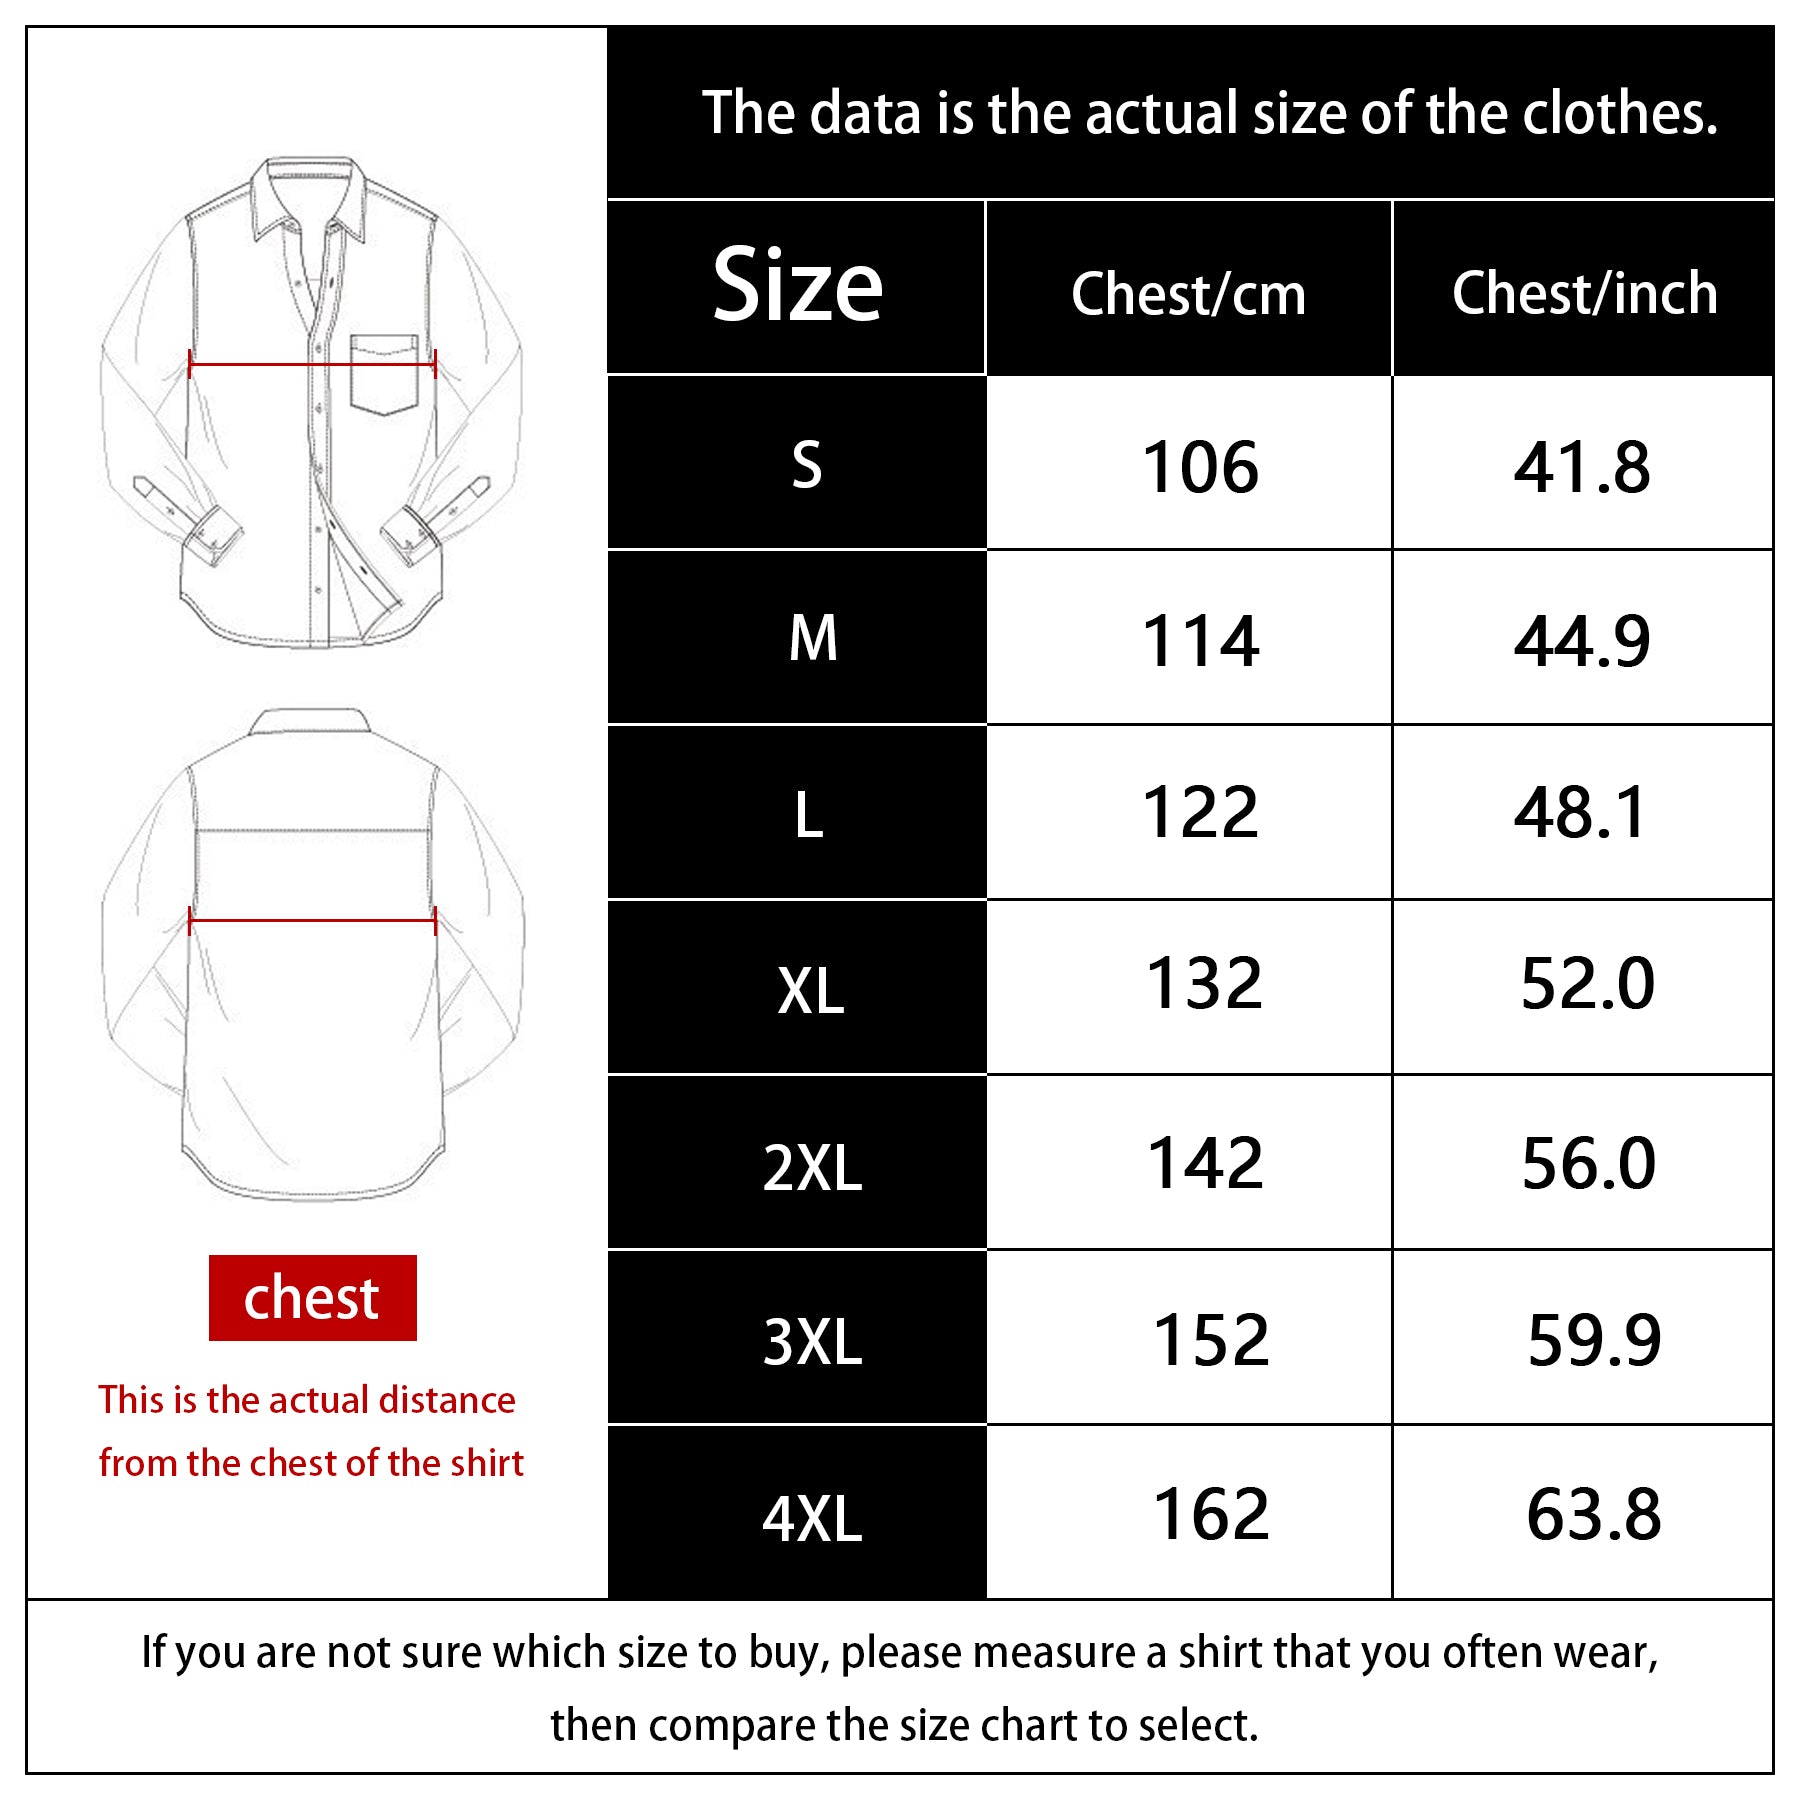 Men's Plaid Flannel Long Sleeve Shirts #0305